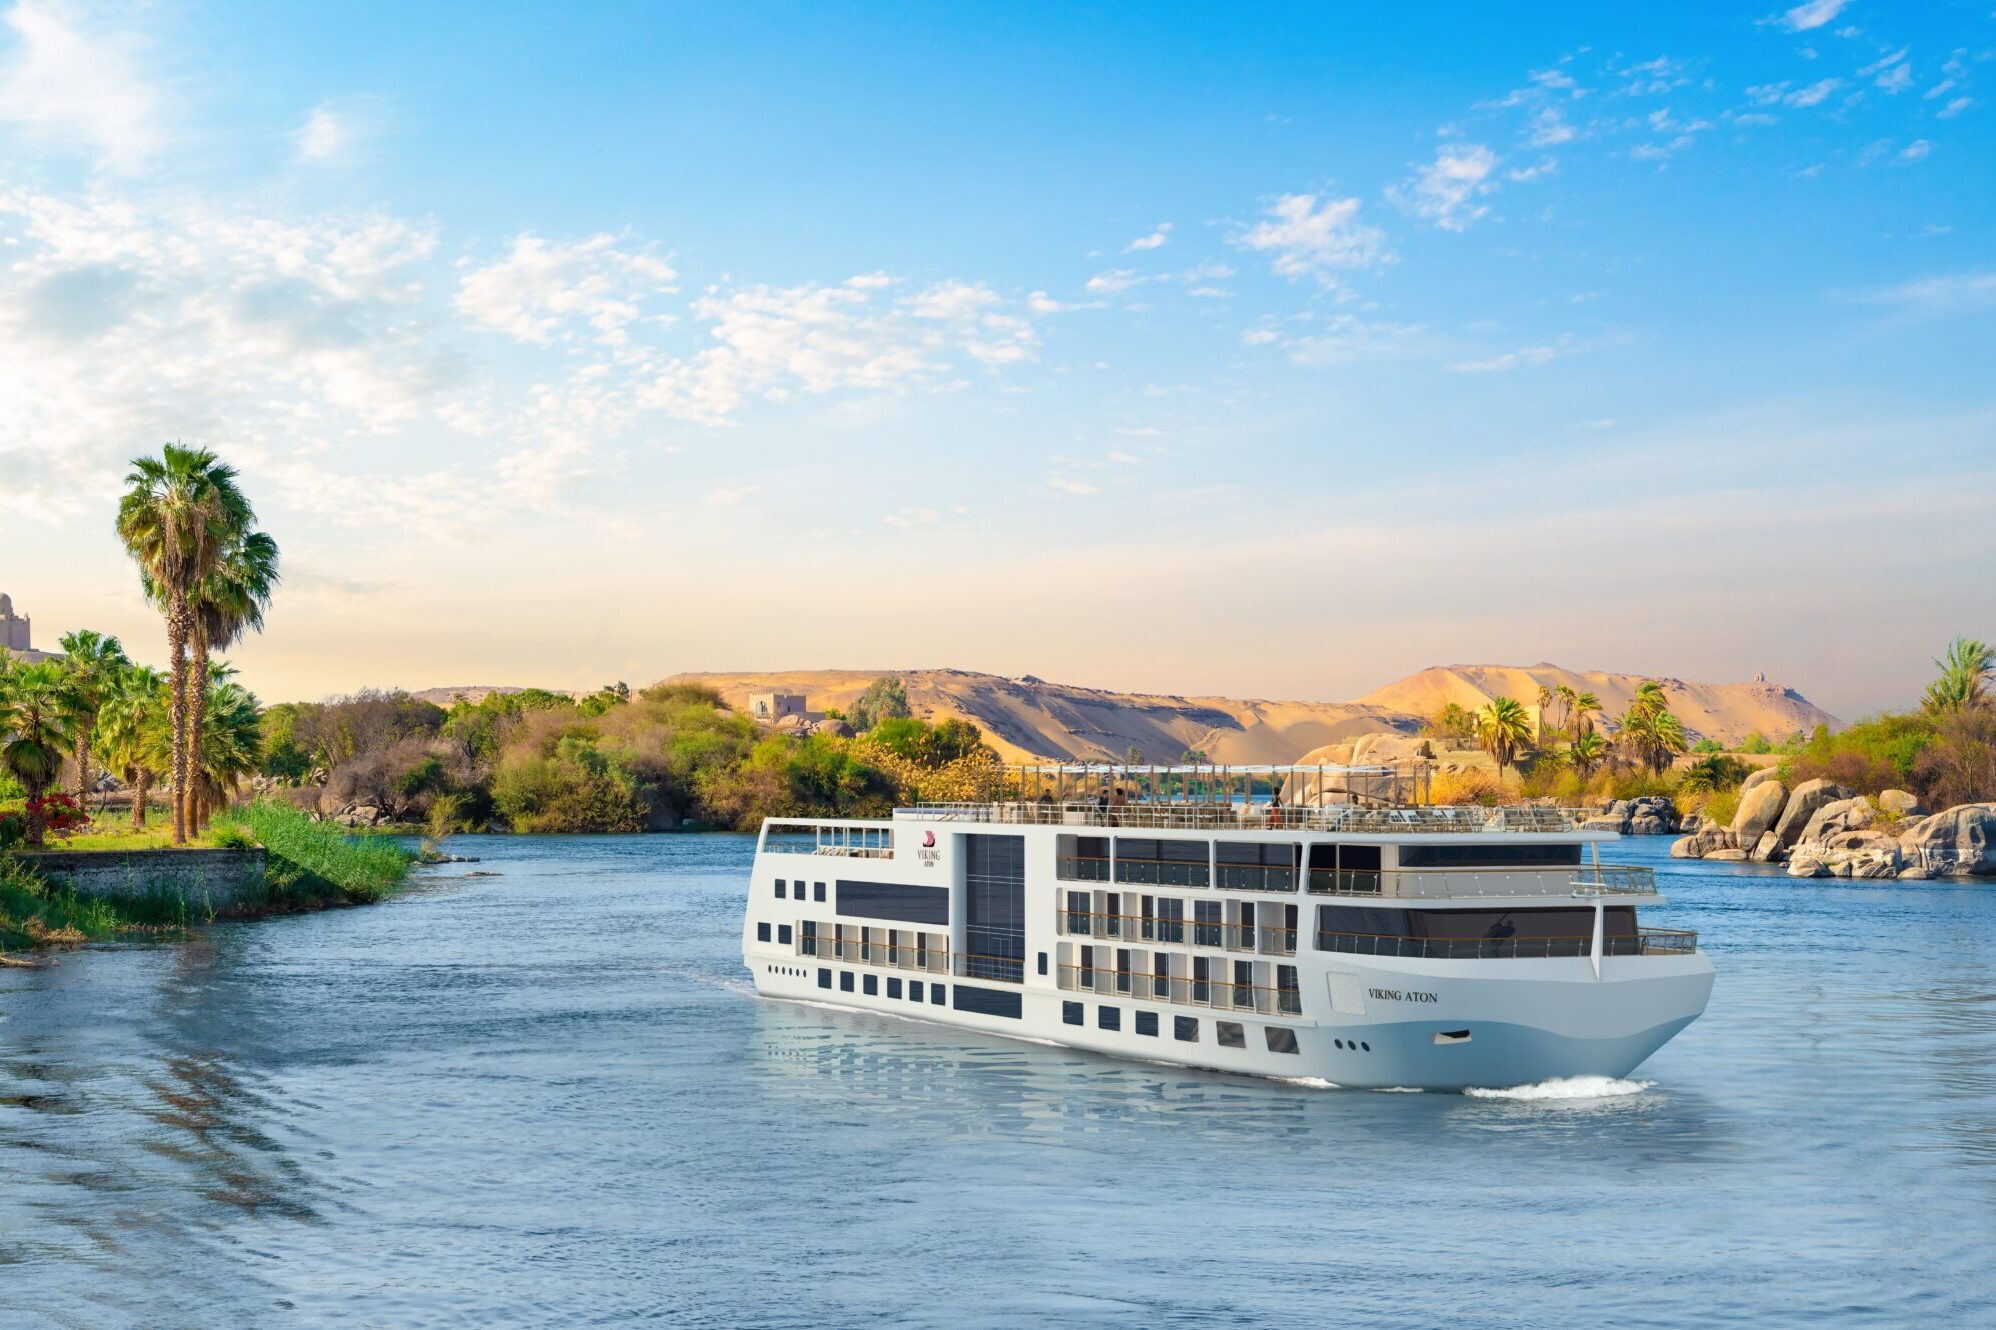 Viking Aton on the Nile new river cruise ships 2023